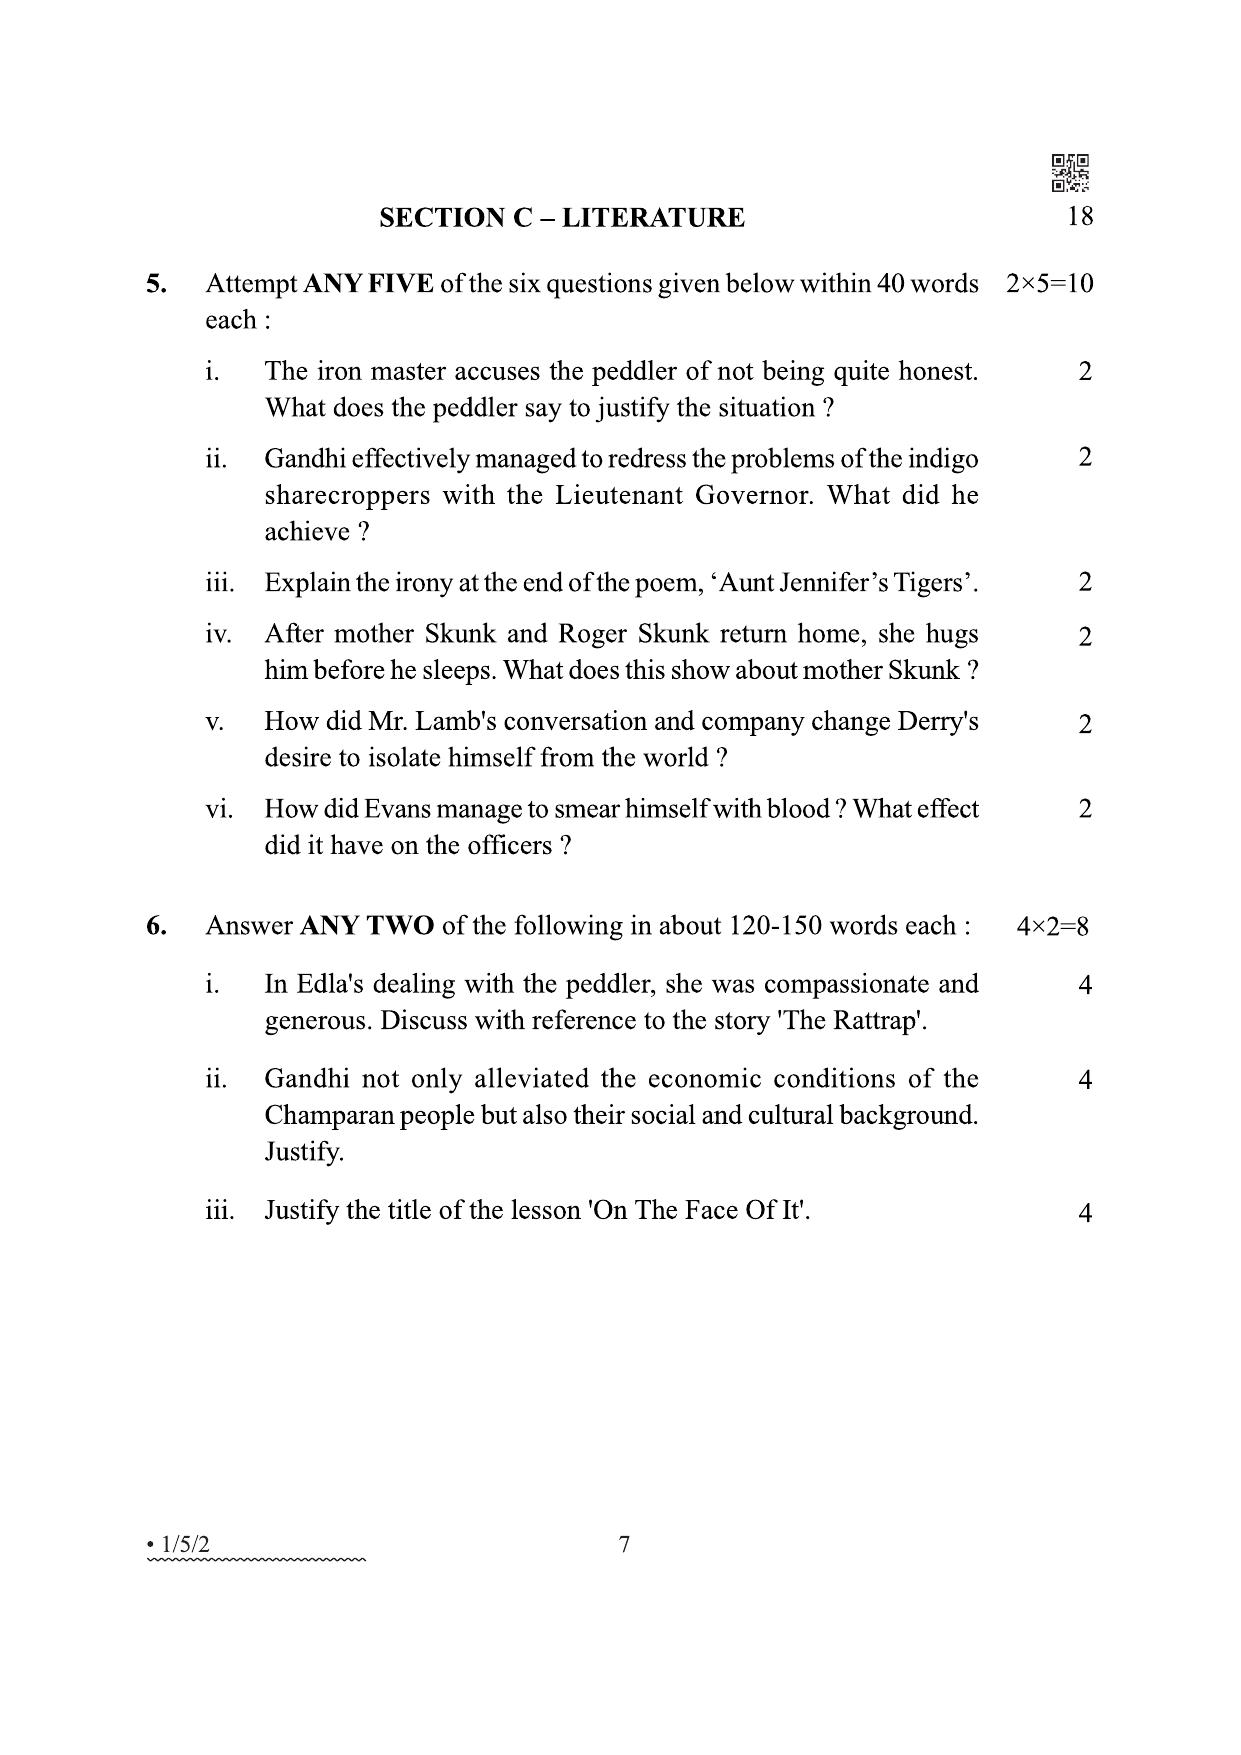 CBSE Class 12 1-5-2 English Core 2022 Question Paper - Page 7